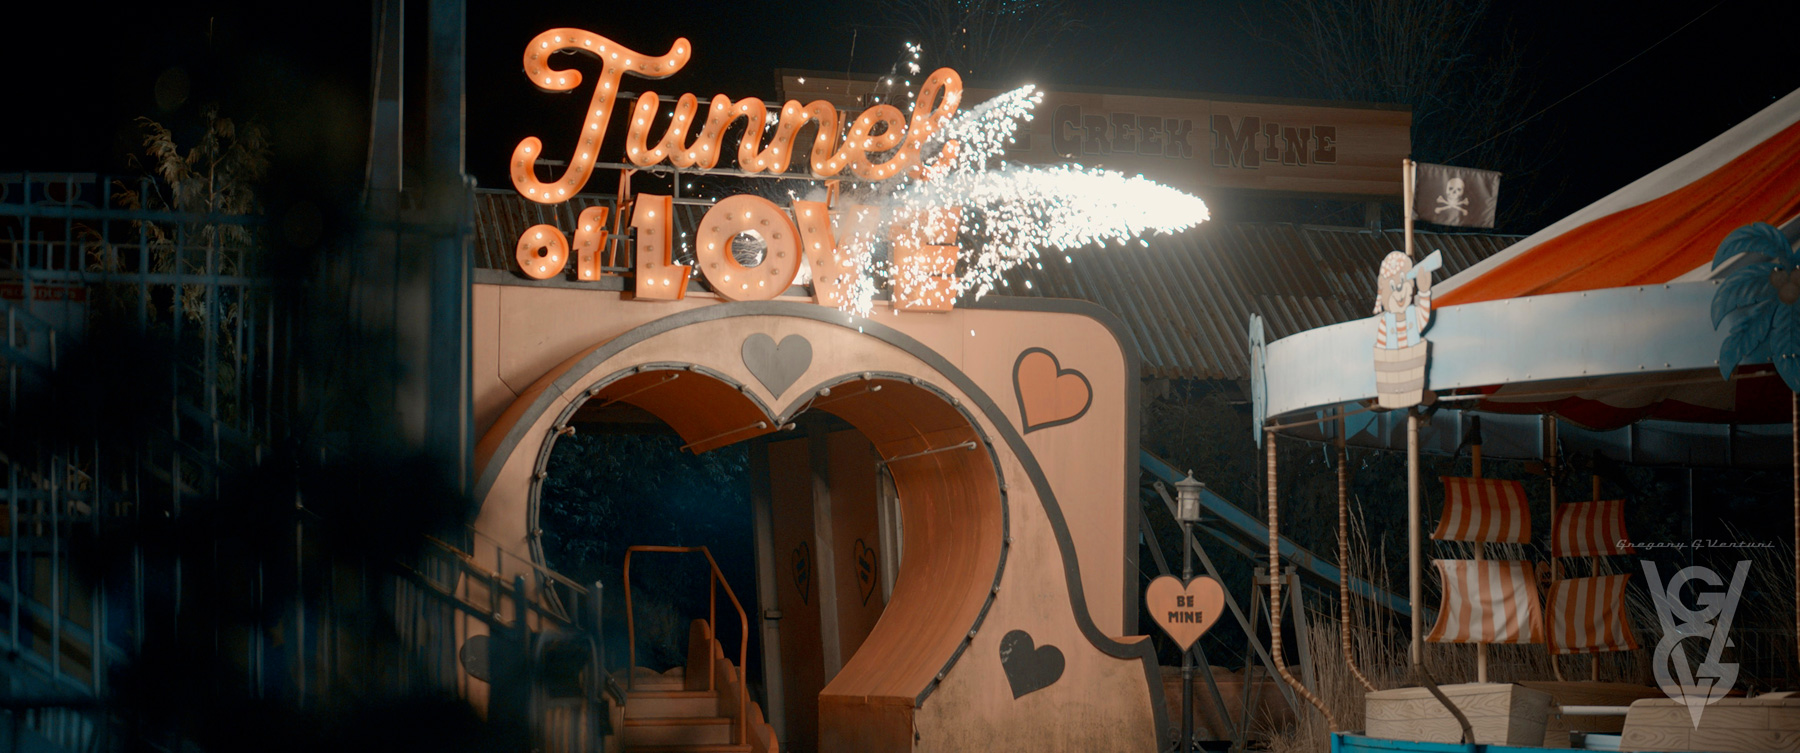 10 Lost Ollie 'Dreamland Amusement Park' Tunnel Of Love Swan Boat Ride Location Install Screen Still